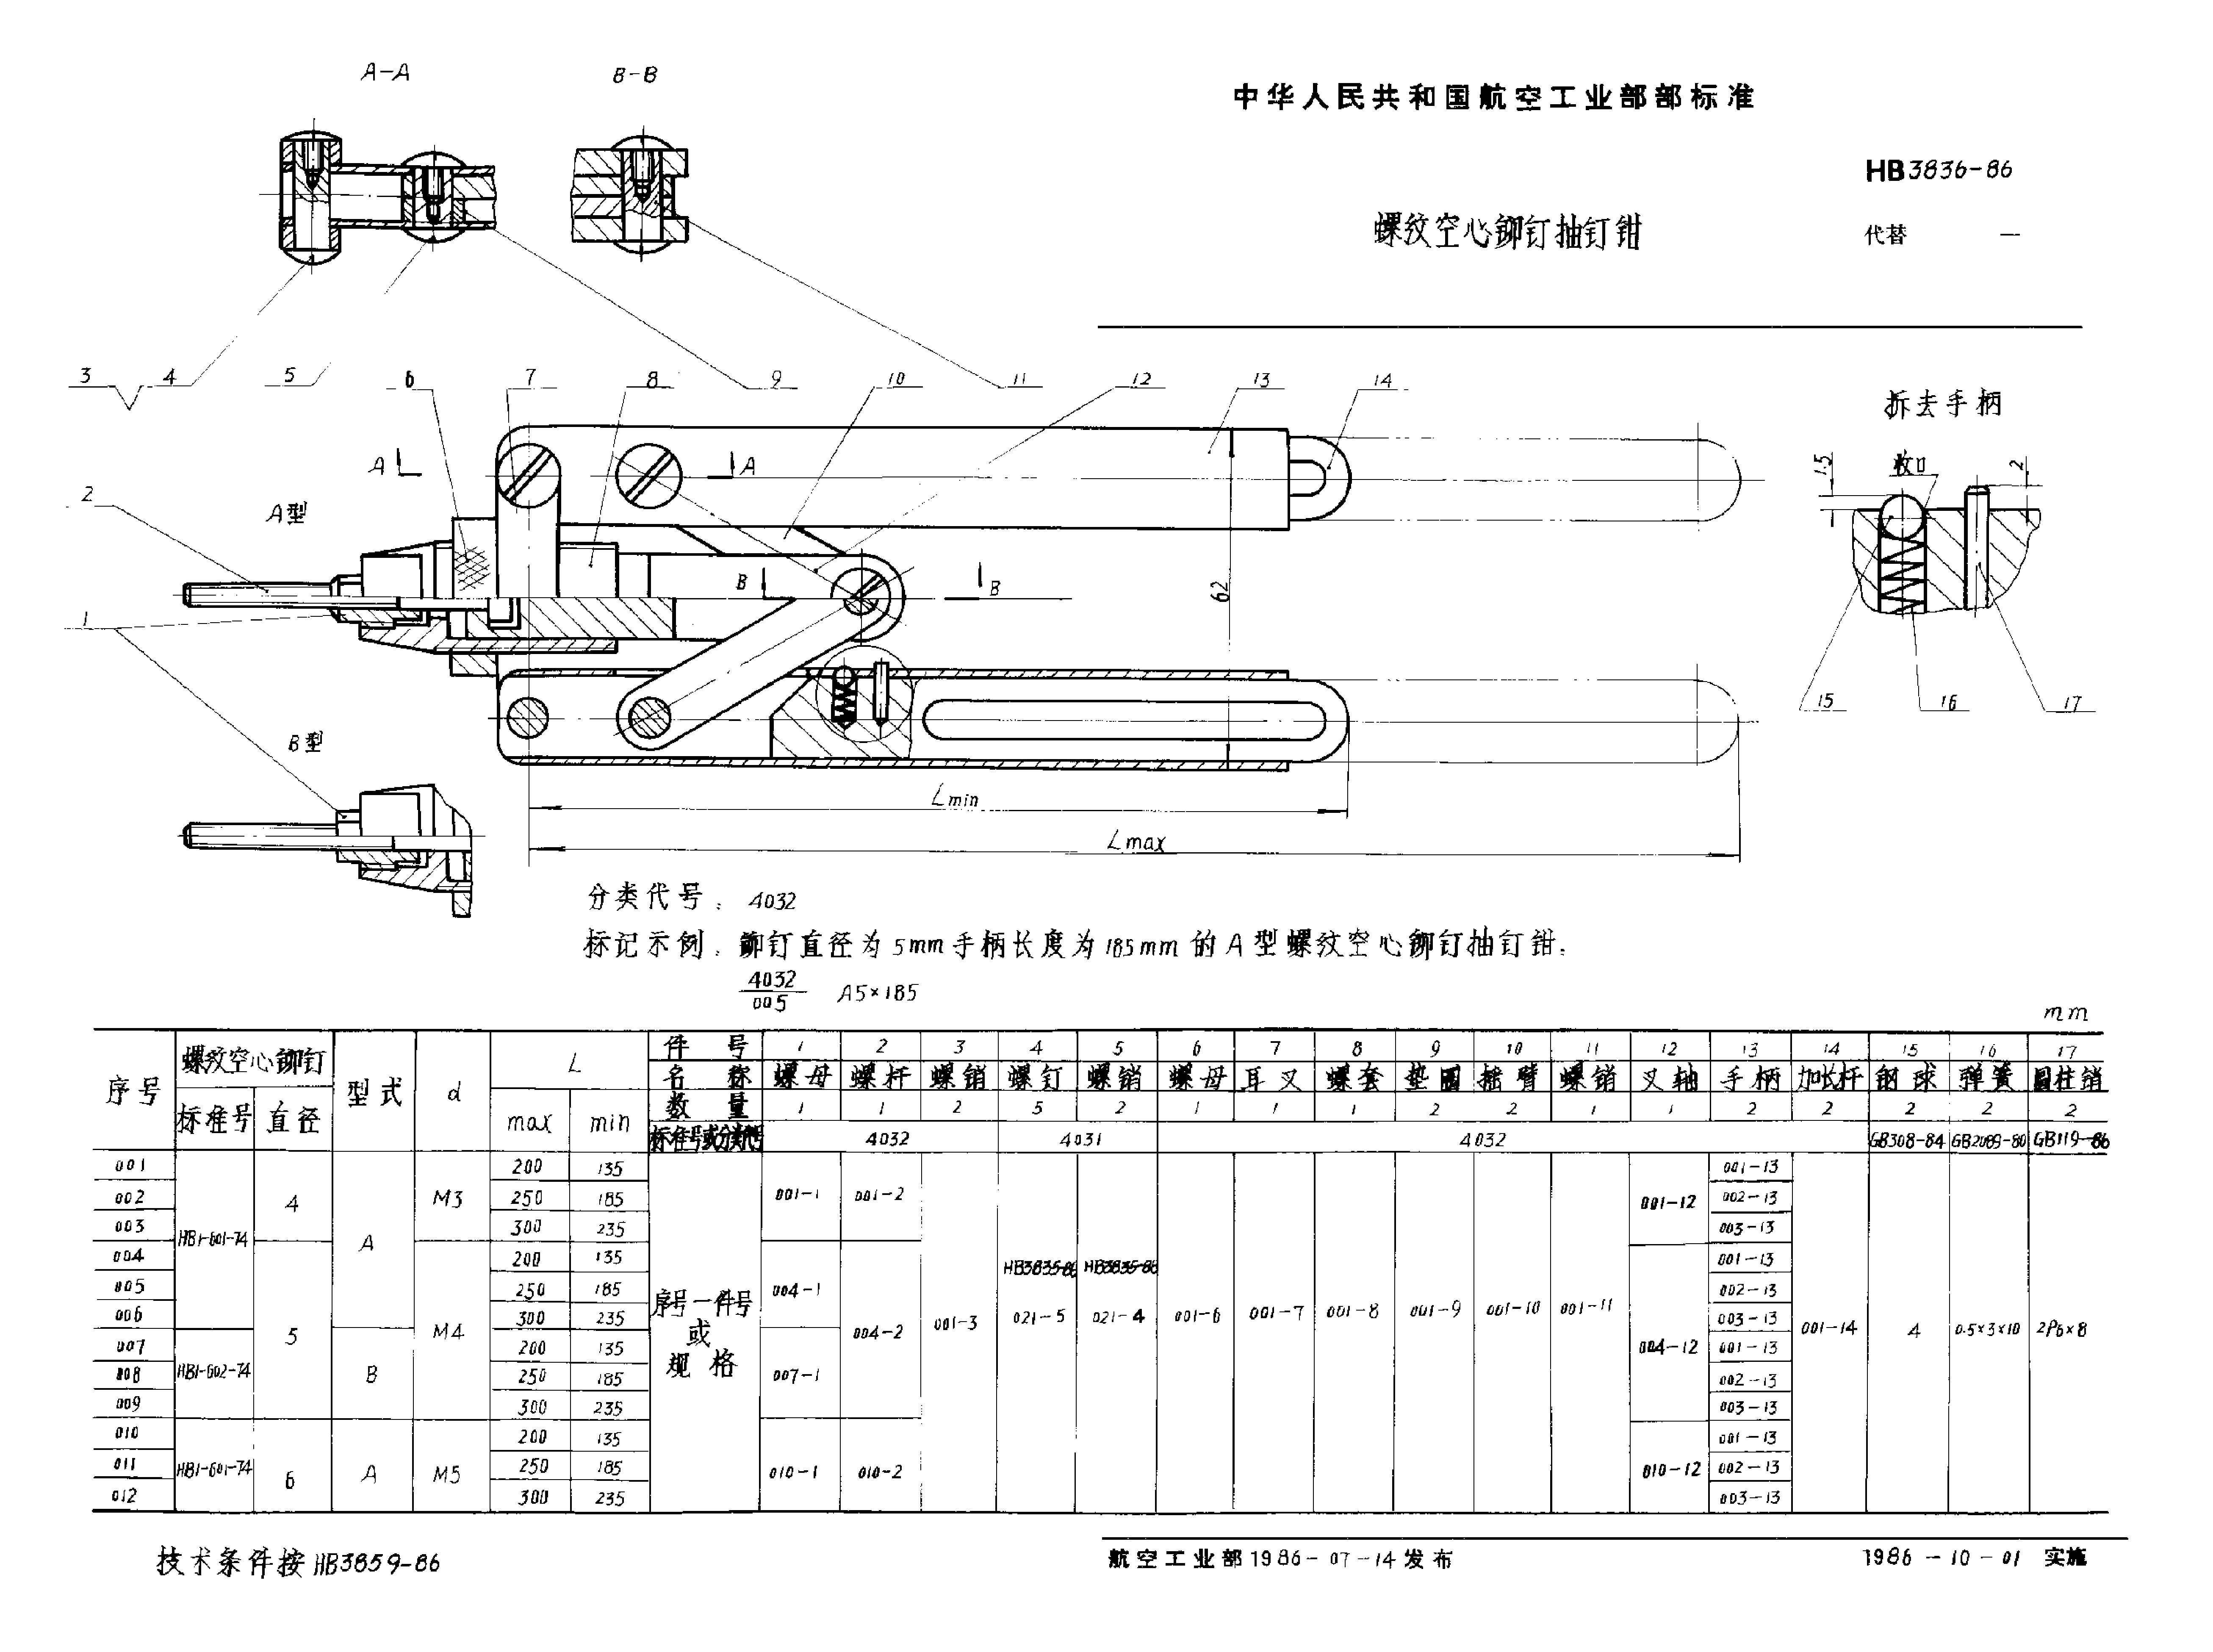 HB 3836-1986封面图